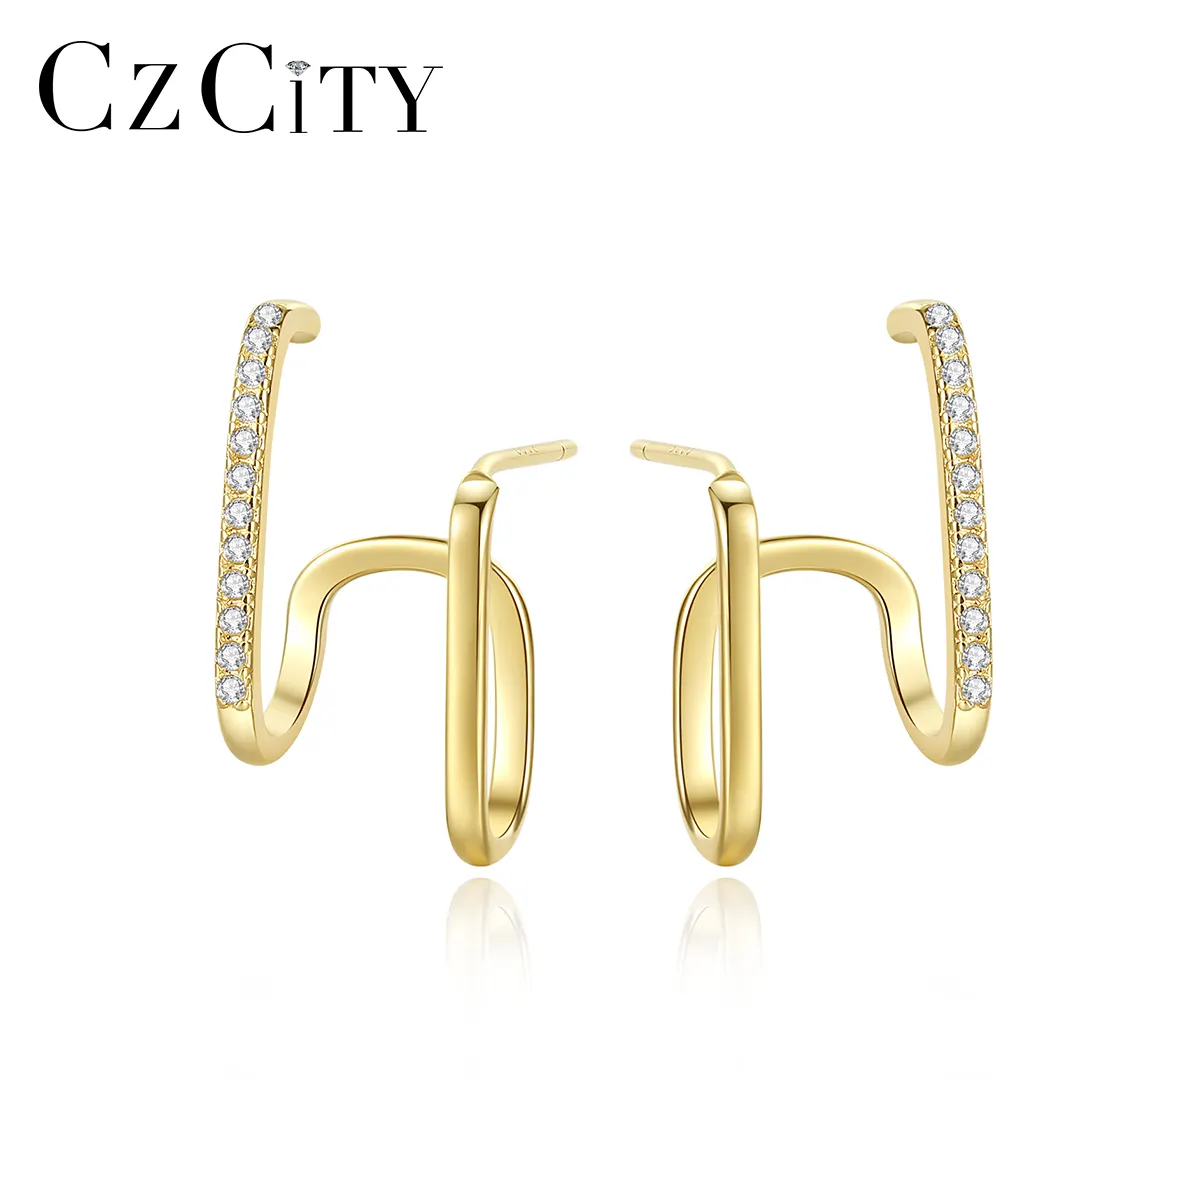 CZCITY Fashion Trend 2021 Jewelry Gold Plated Earing Hook Hoop Ear Cuff Earring